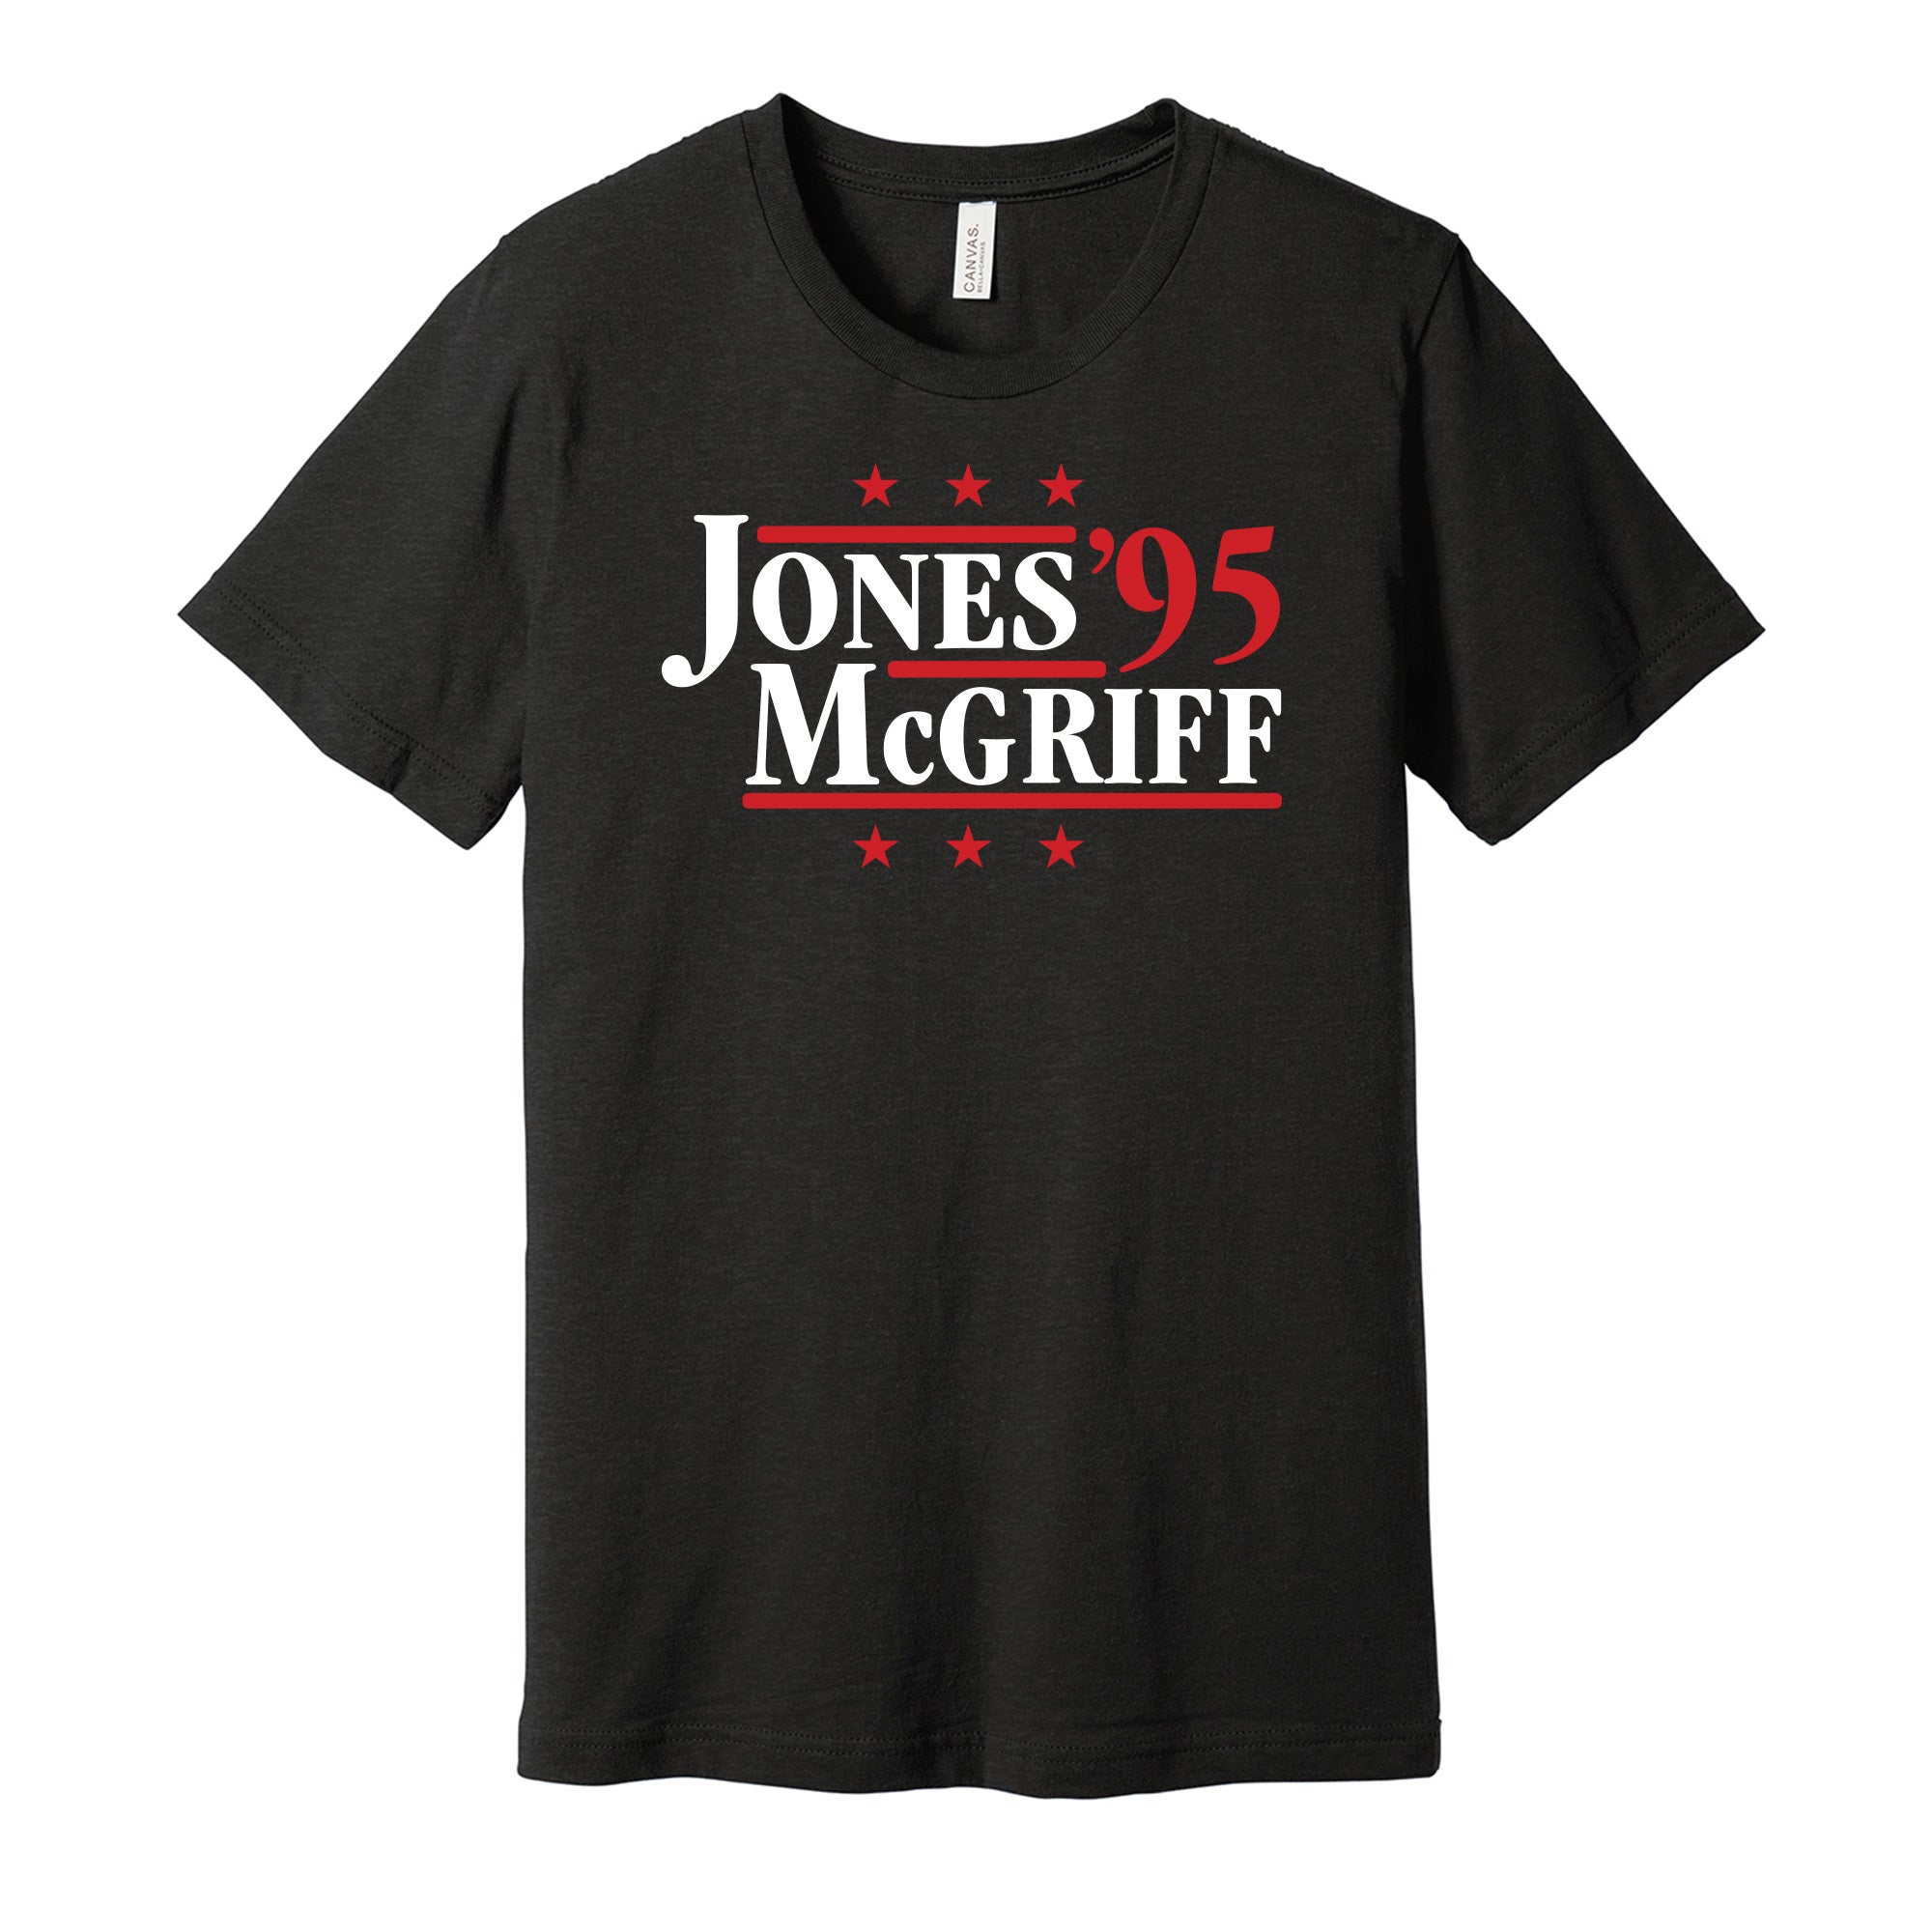 Jones & McGriff '95 - Atlanta Baseball Legends Political Campaign Parody T-Shirt - Hyper Than Hype Shirts M / White Shirt